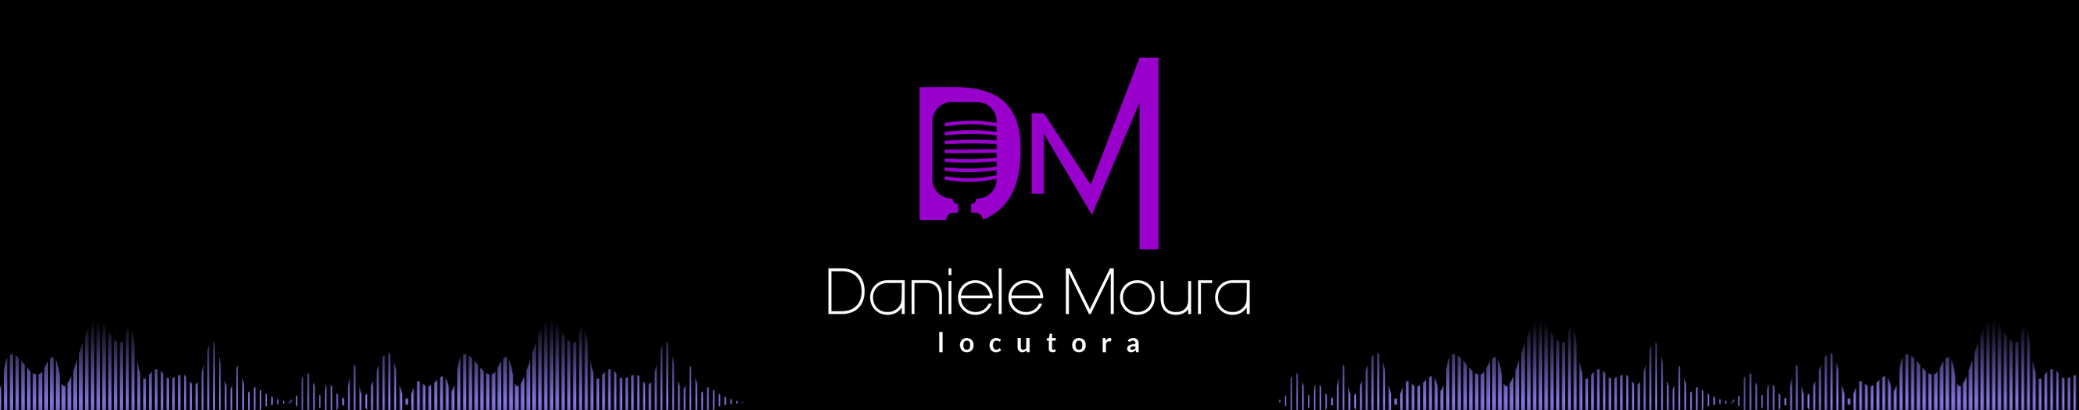 Баннер профиля Daniele Moura